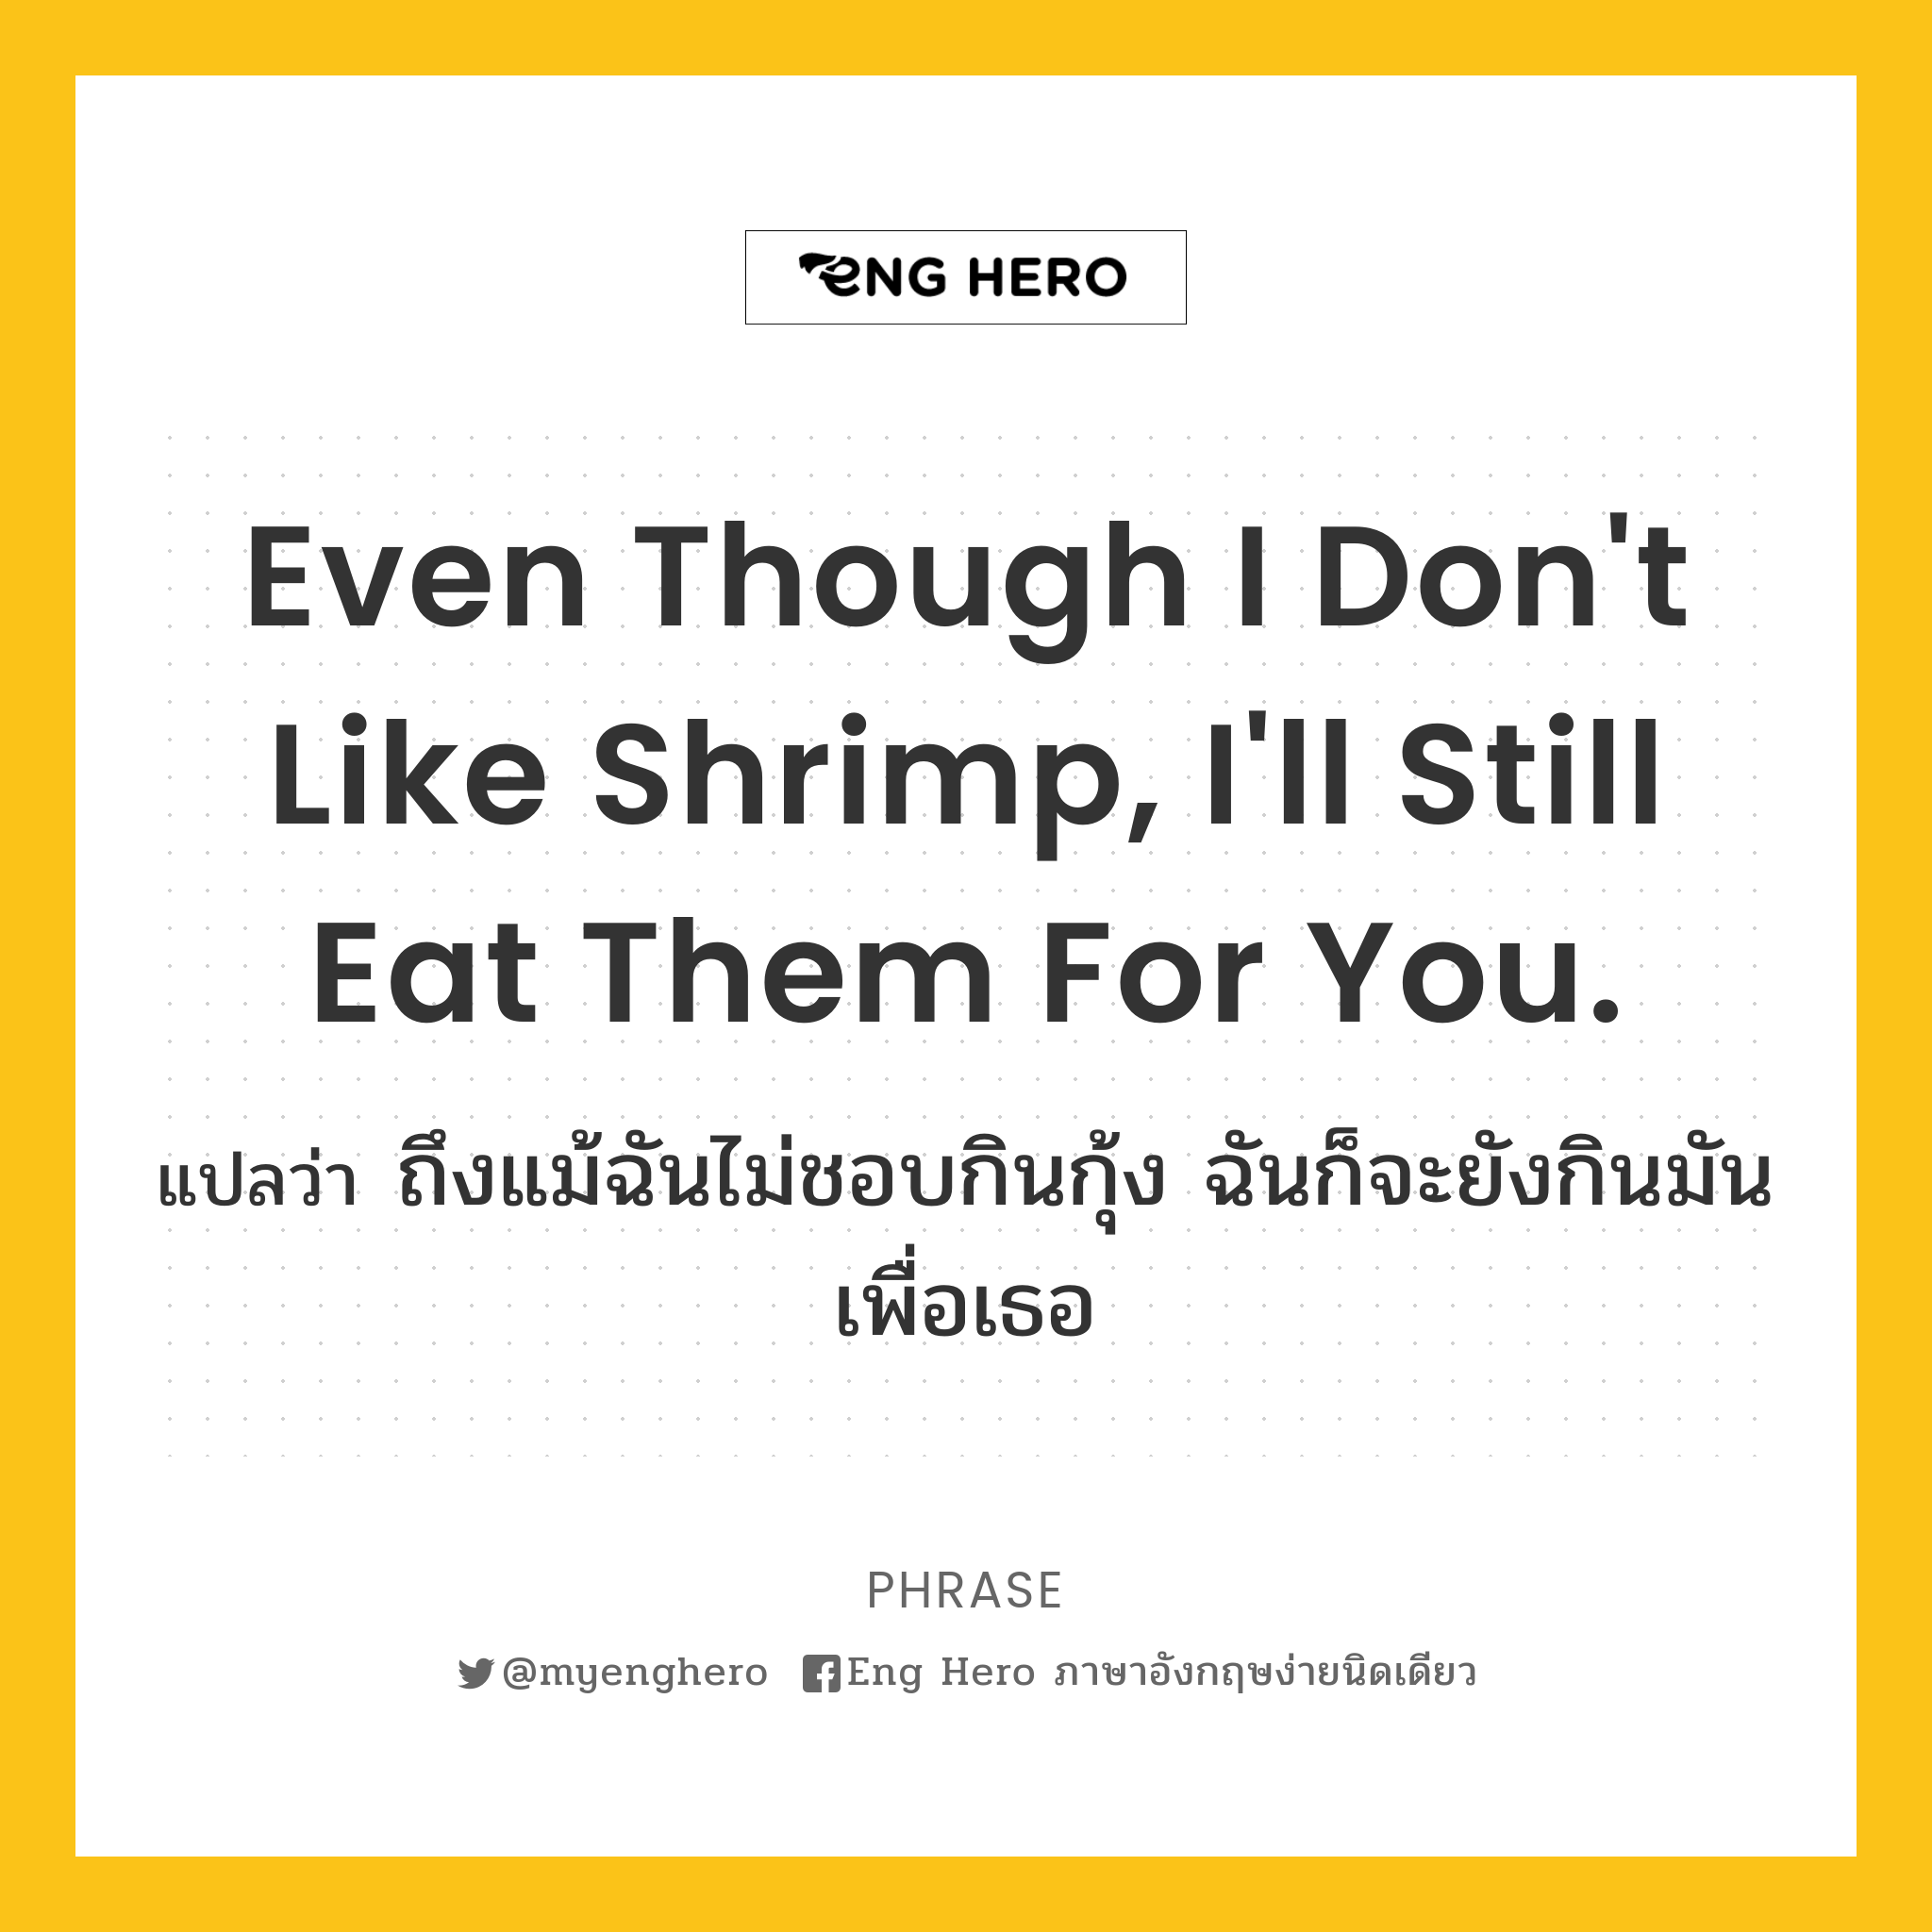 Even though I don't like shrimp, I'll still eat them for you.